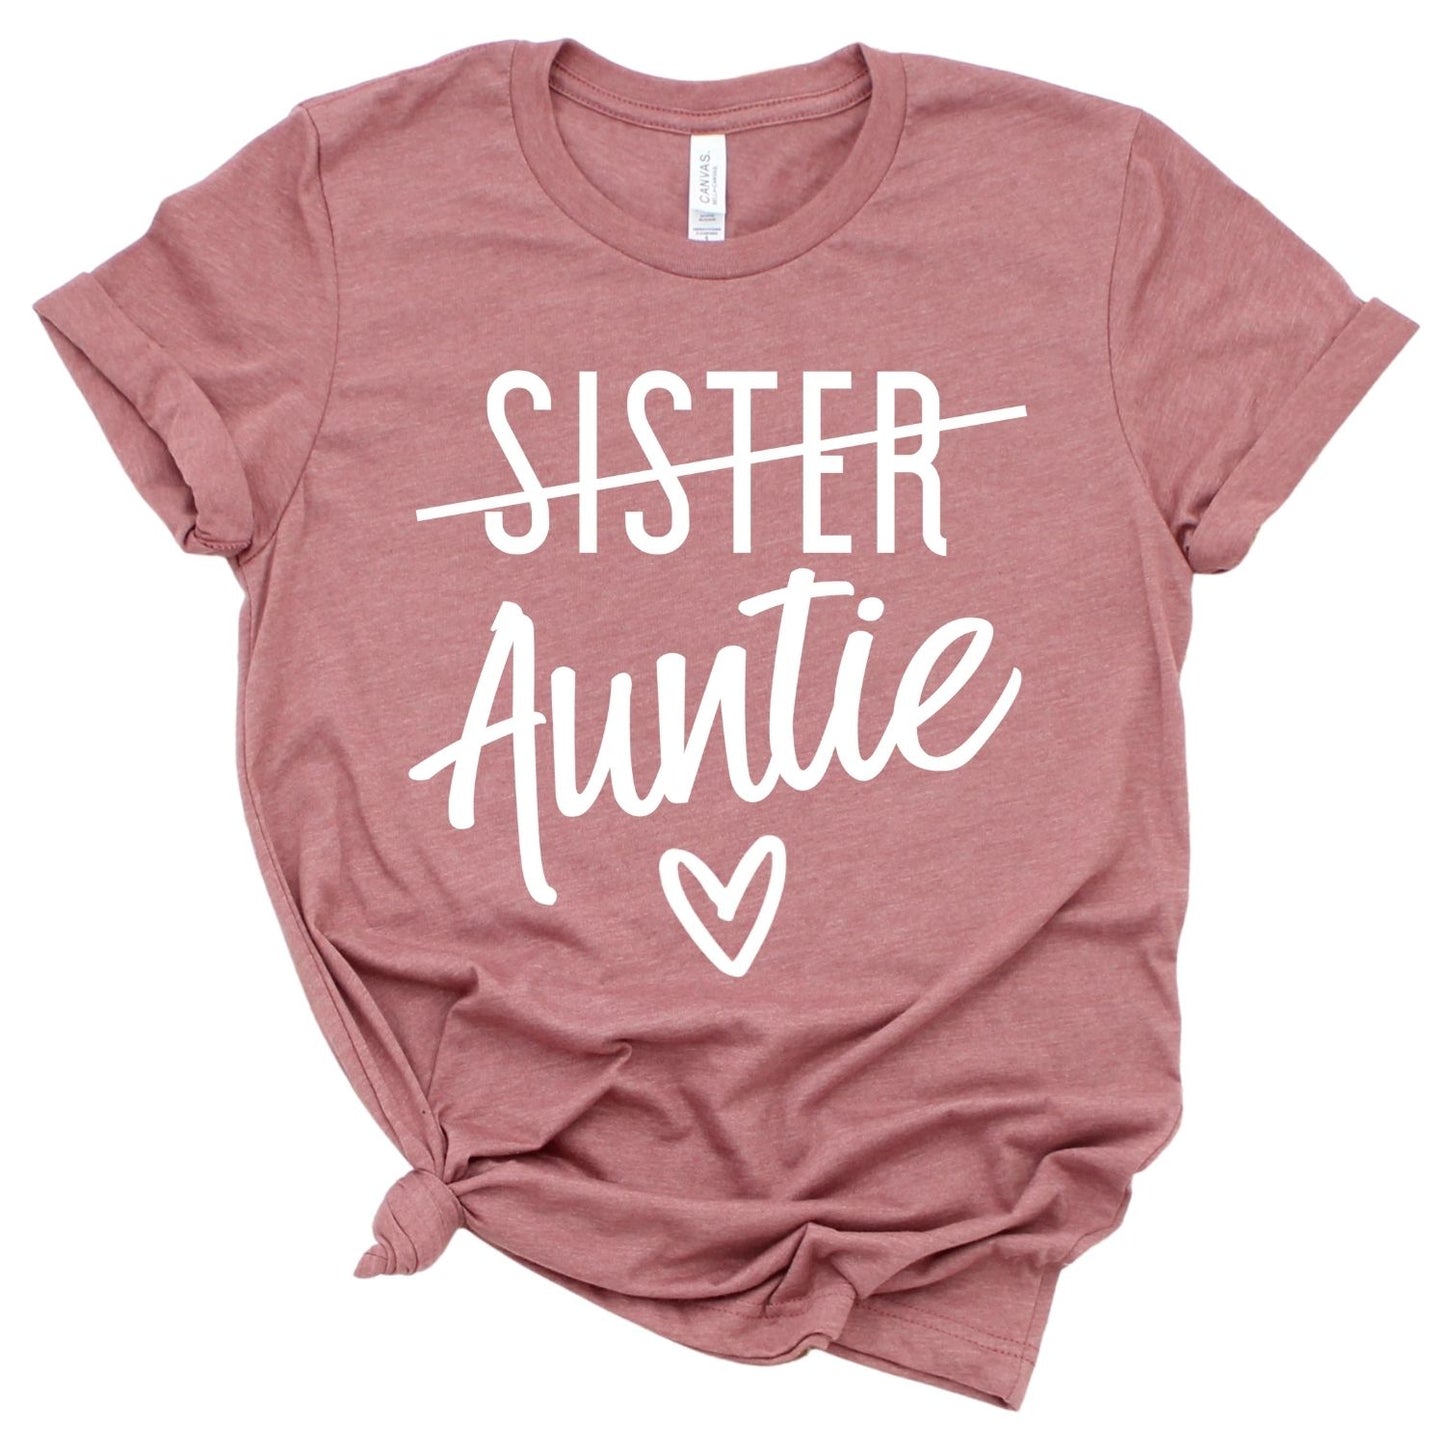 Sister - Auntie